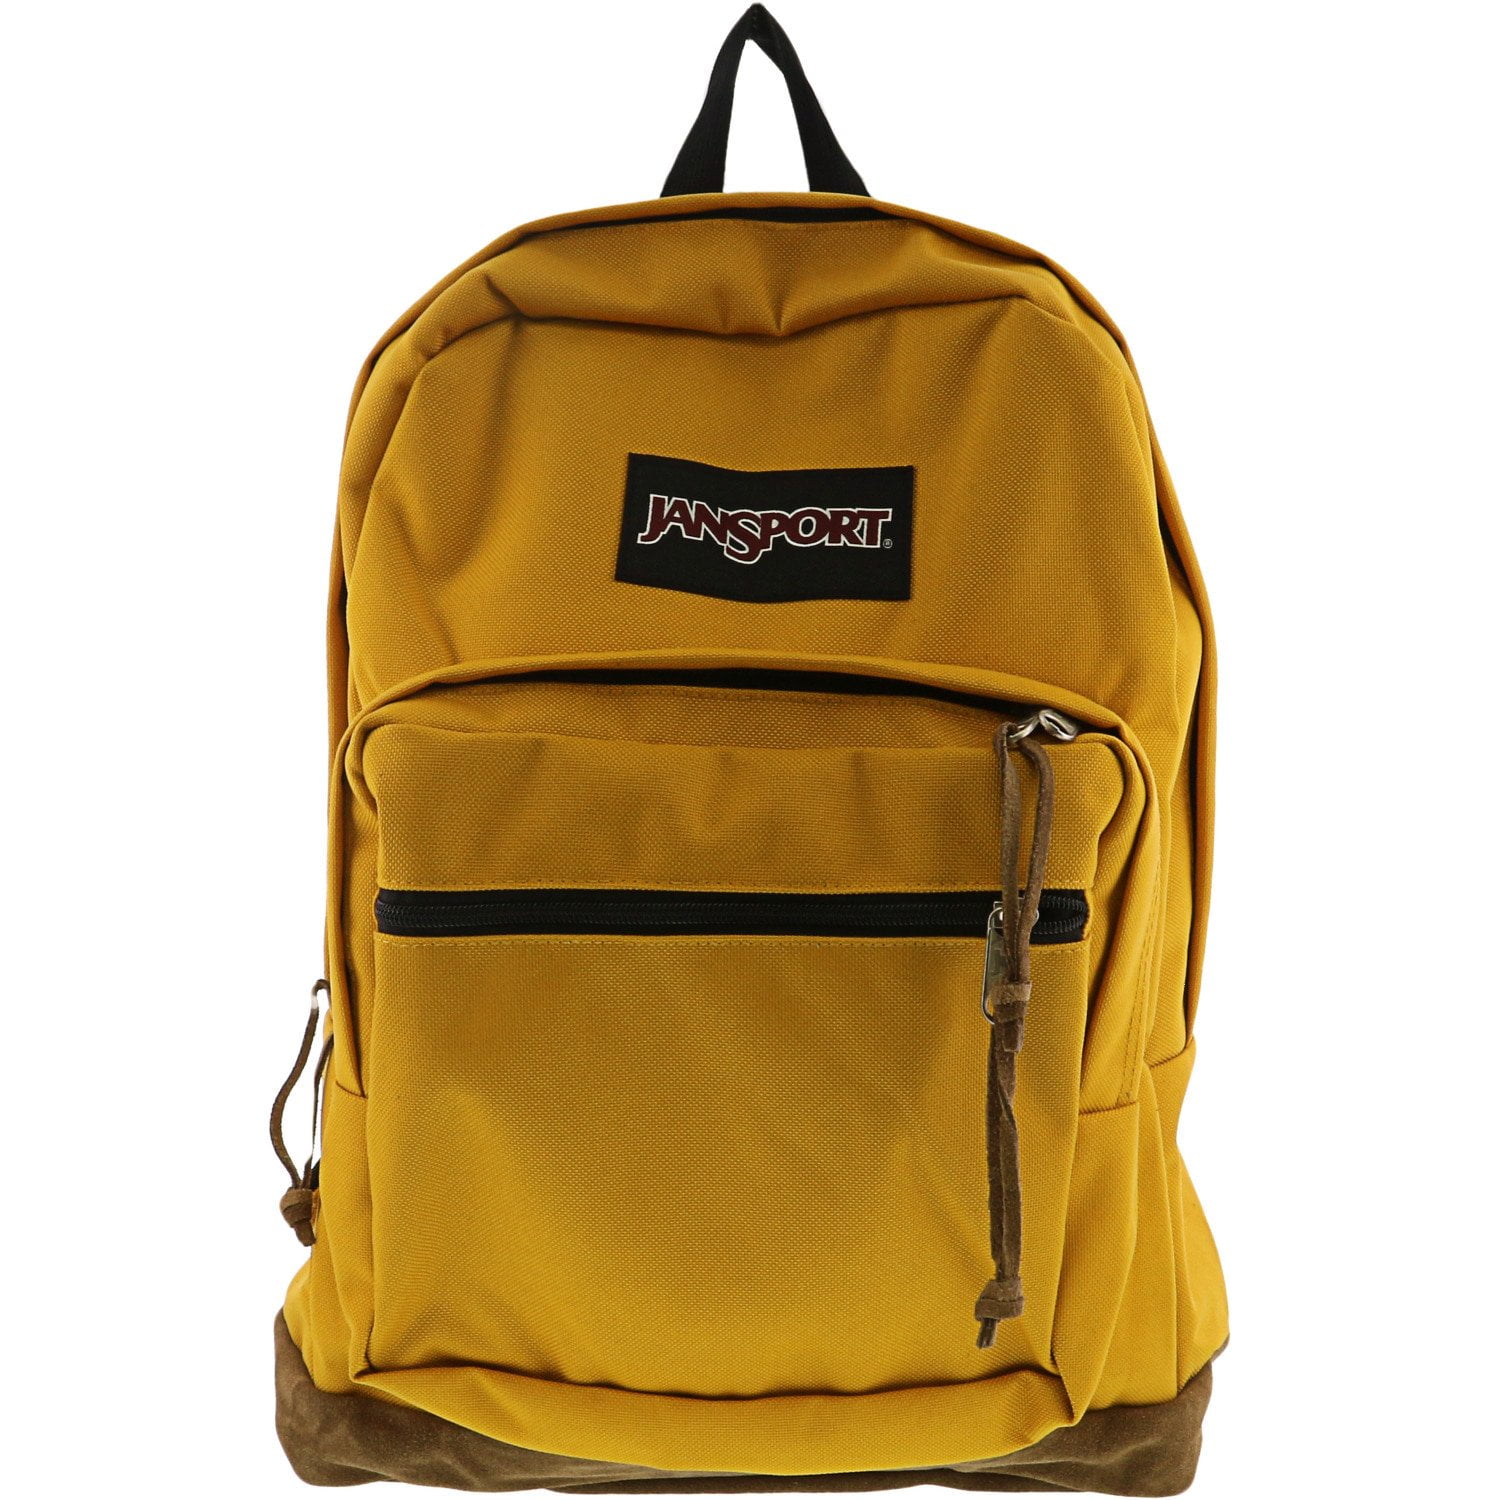 jansport backpack mustard yellow